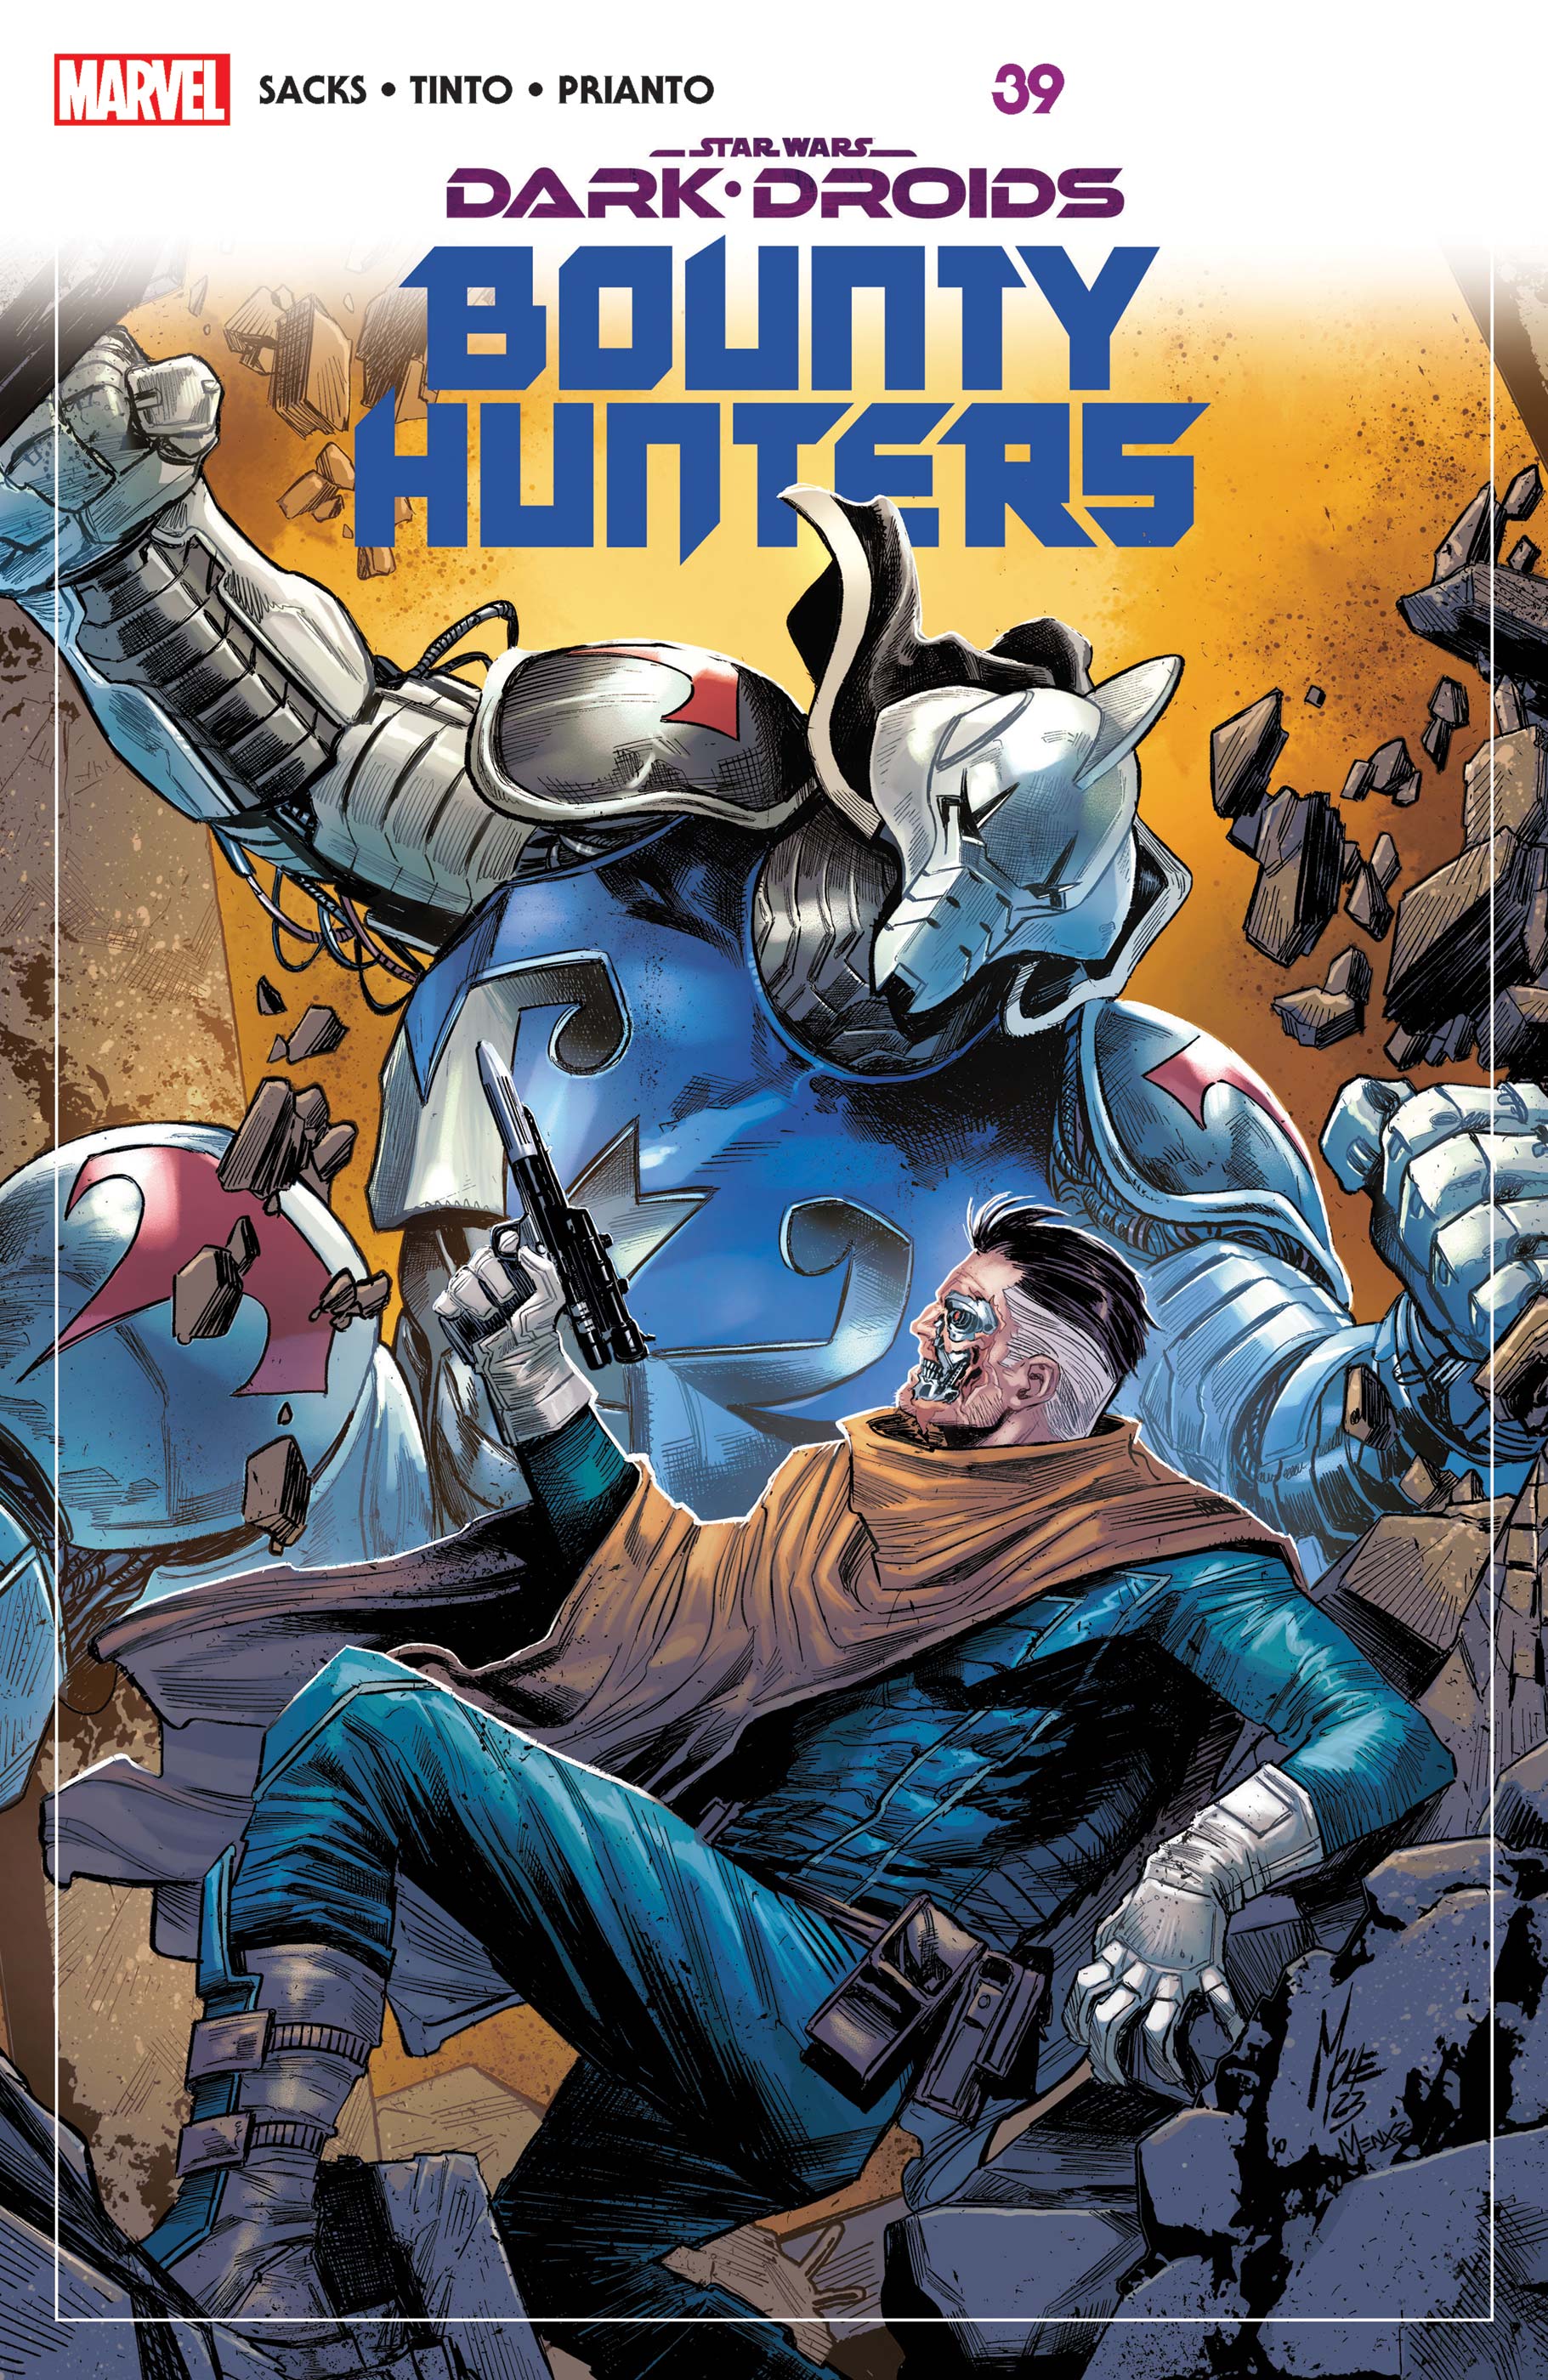 Star Wars: Bounty Hunters (2020) #39